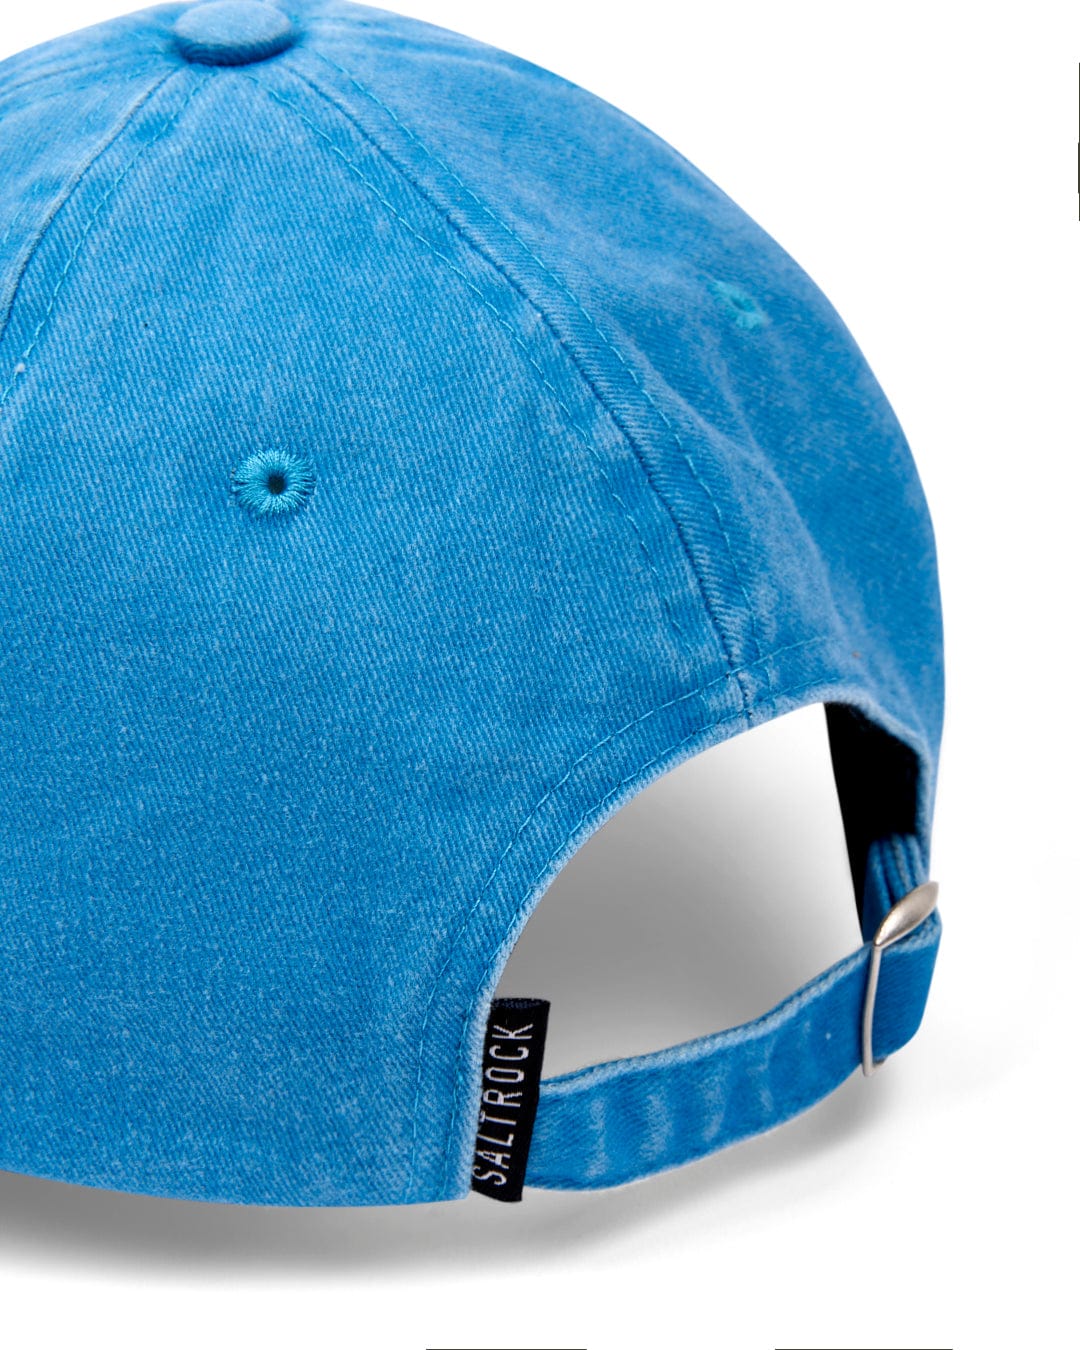 SR Original Cap - Blue baseball cap with an adjustable strap and a branded Saltrock badge.